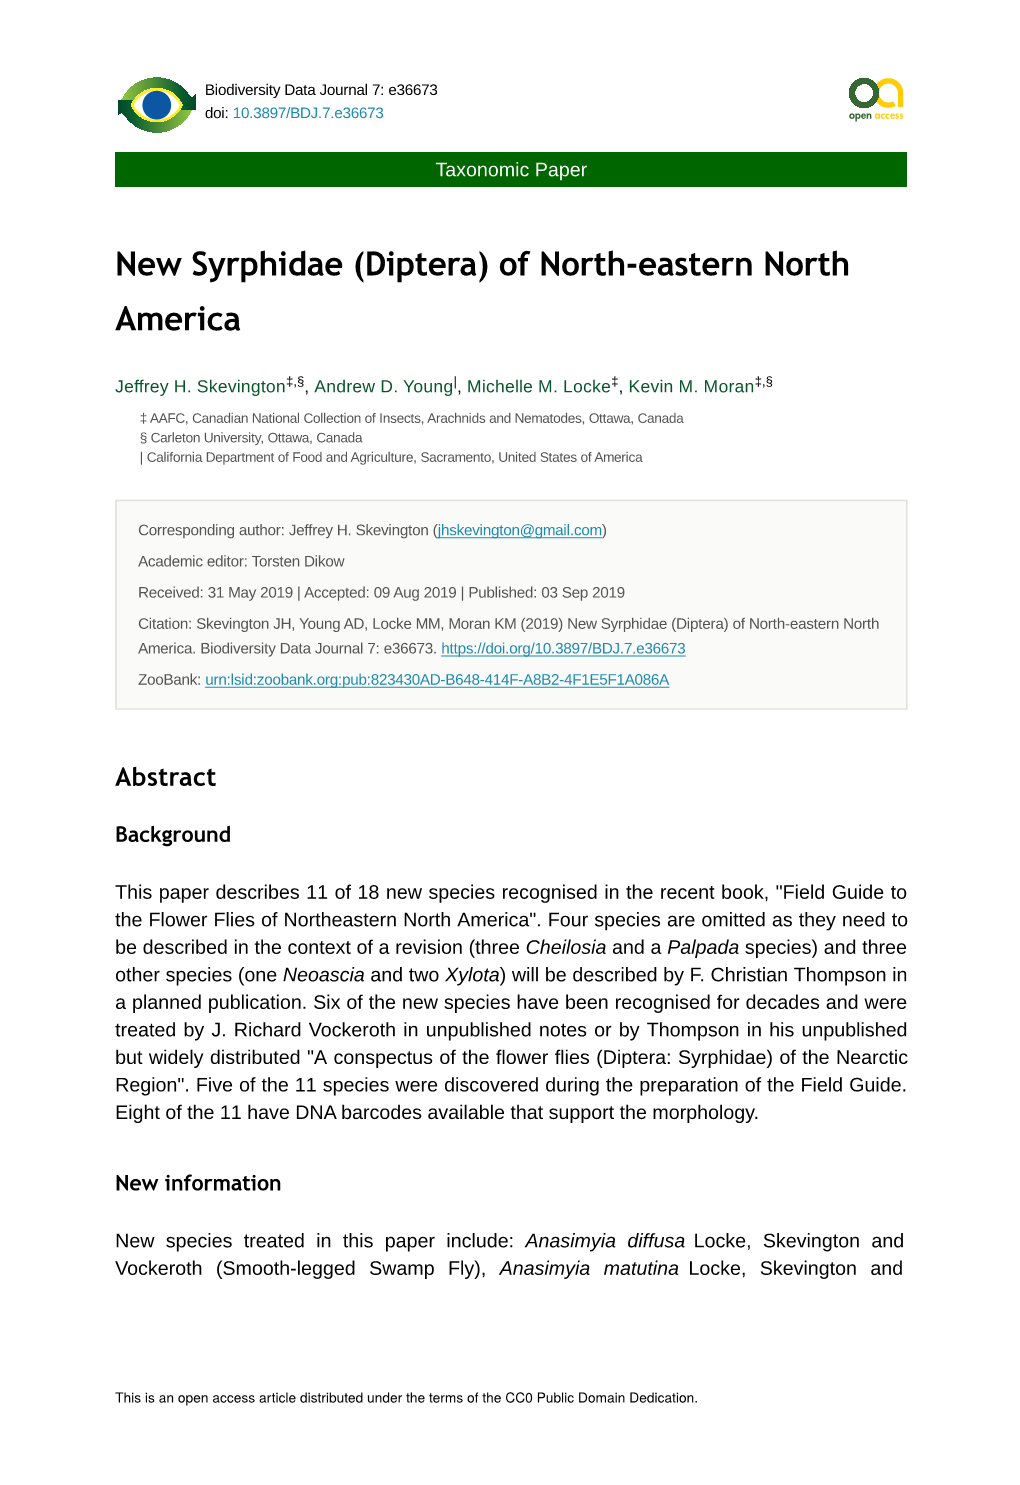 Diptera) of North-Eastern North America